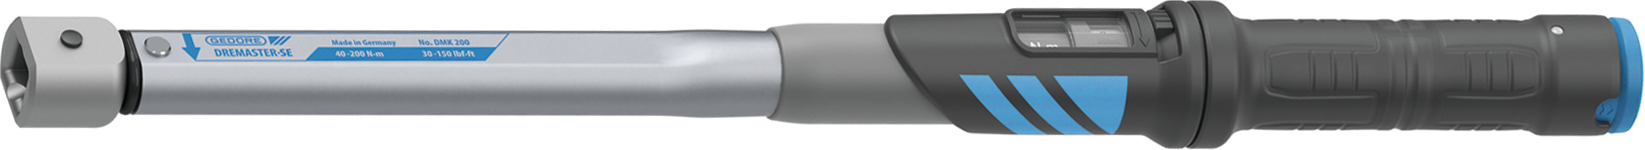 Drehmomentschlüssel Einsteckvierkant DREMASTER® inkl. Werkszertifikat 14x18 L499,5mm 40-200Nm